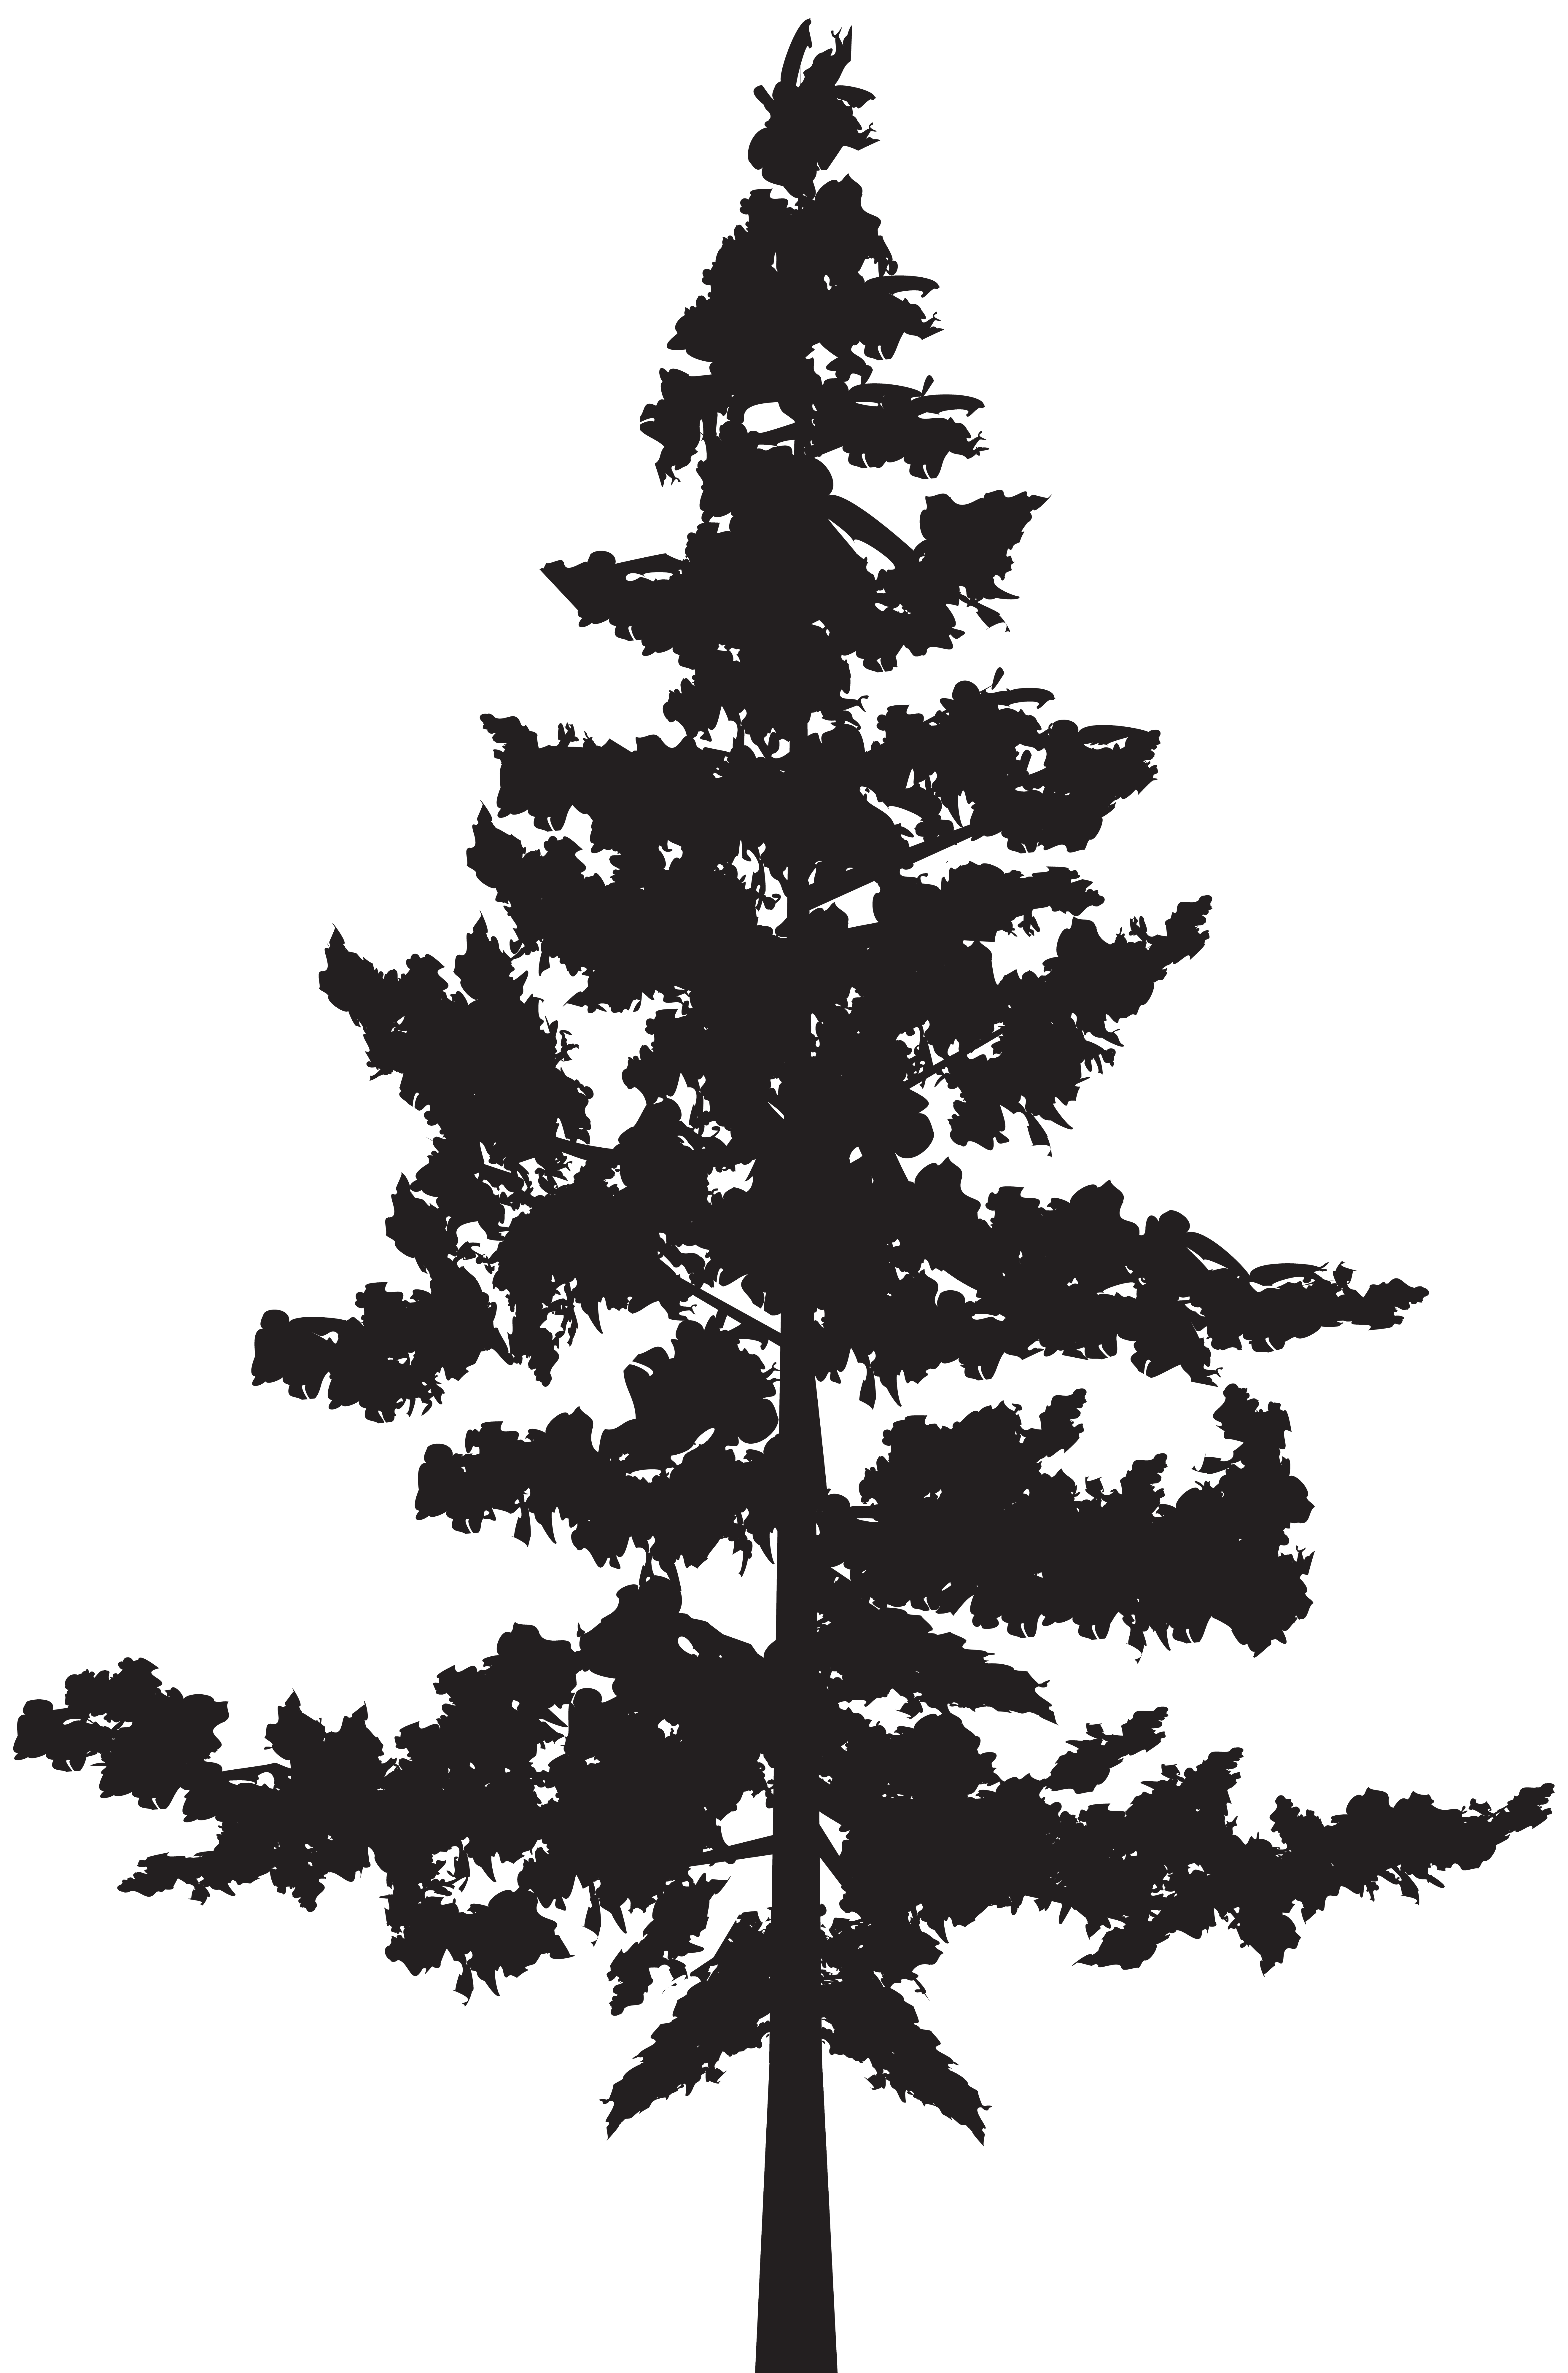 Black pine Tree Pinus contorta - Tree PNG Silhouette Clip Art Image png ...